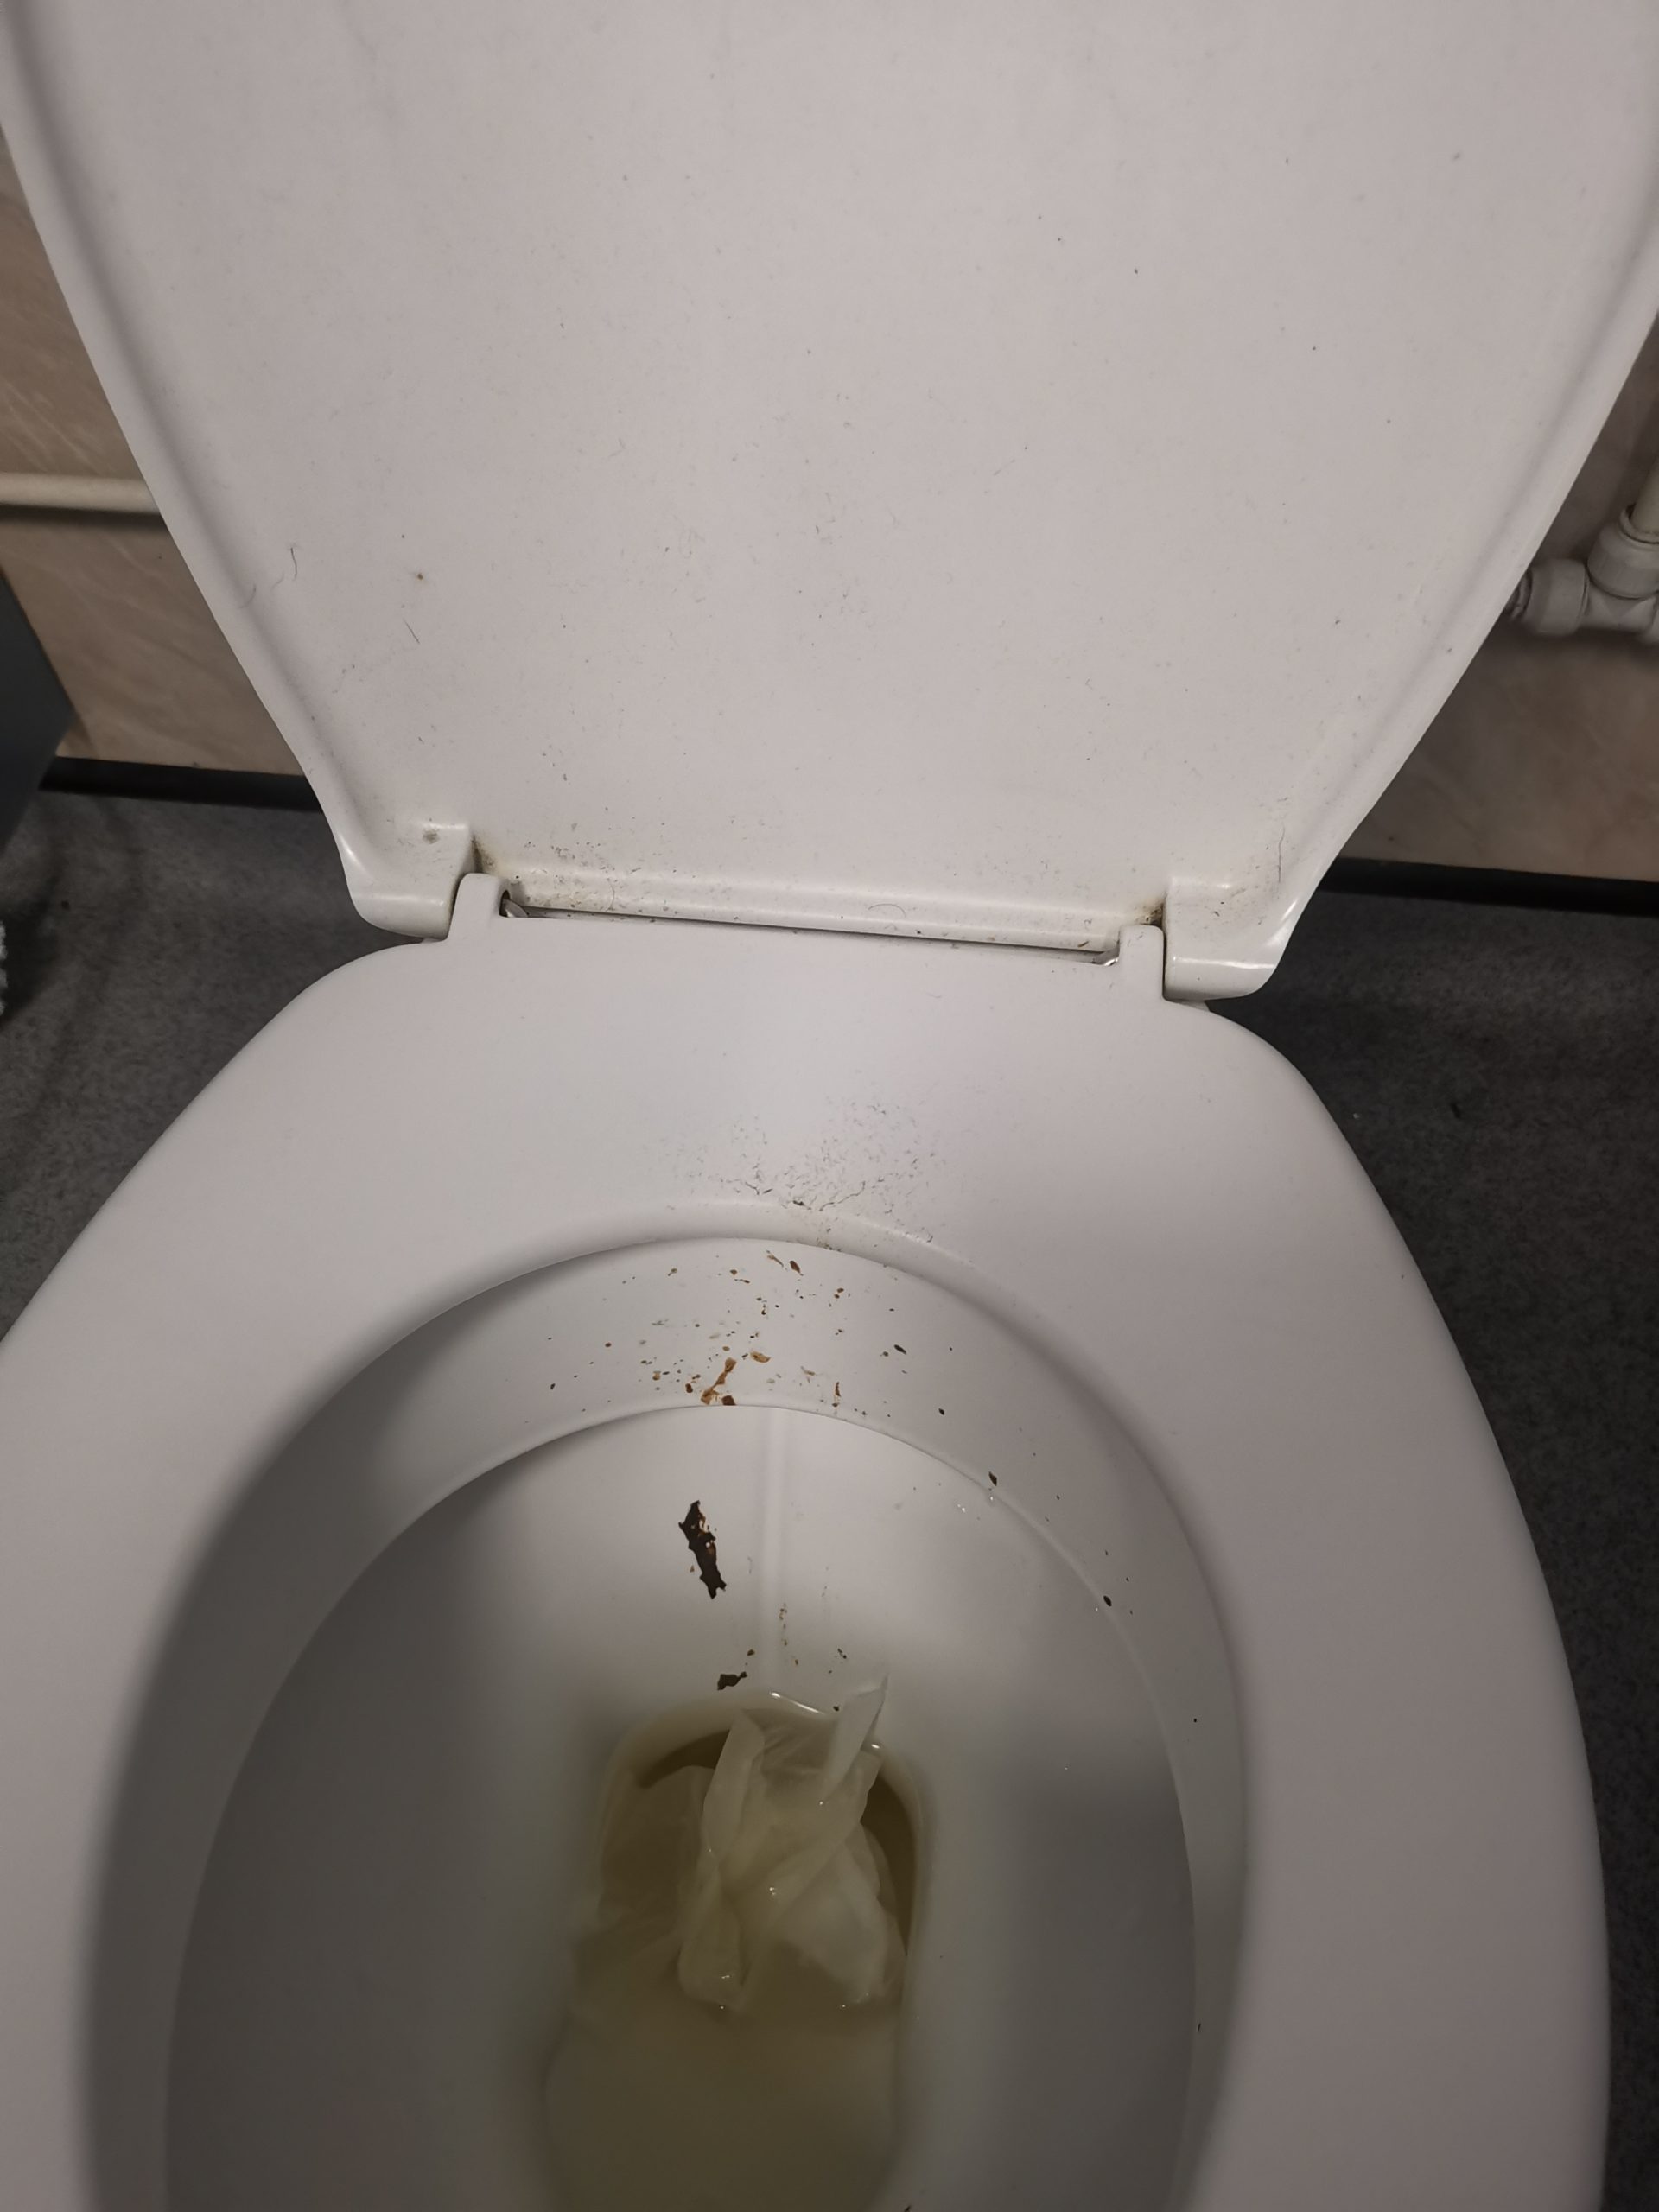 Booker Wholesale complaint Toilets are never clean